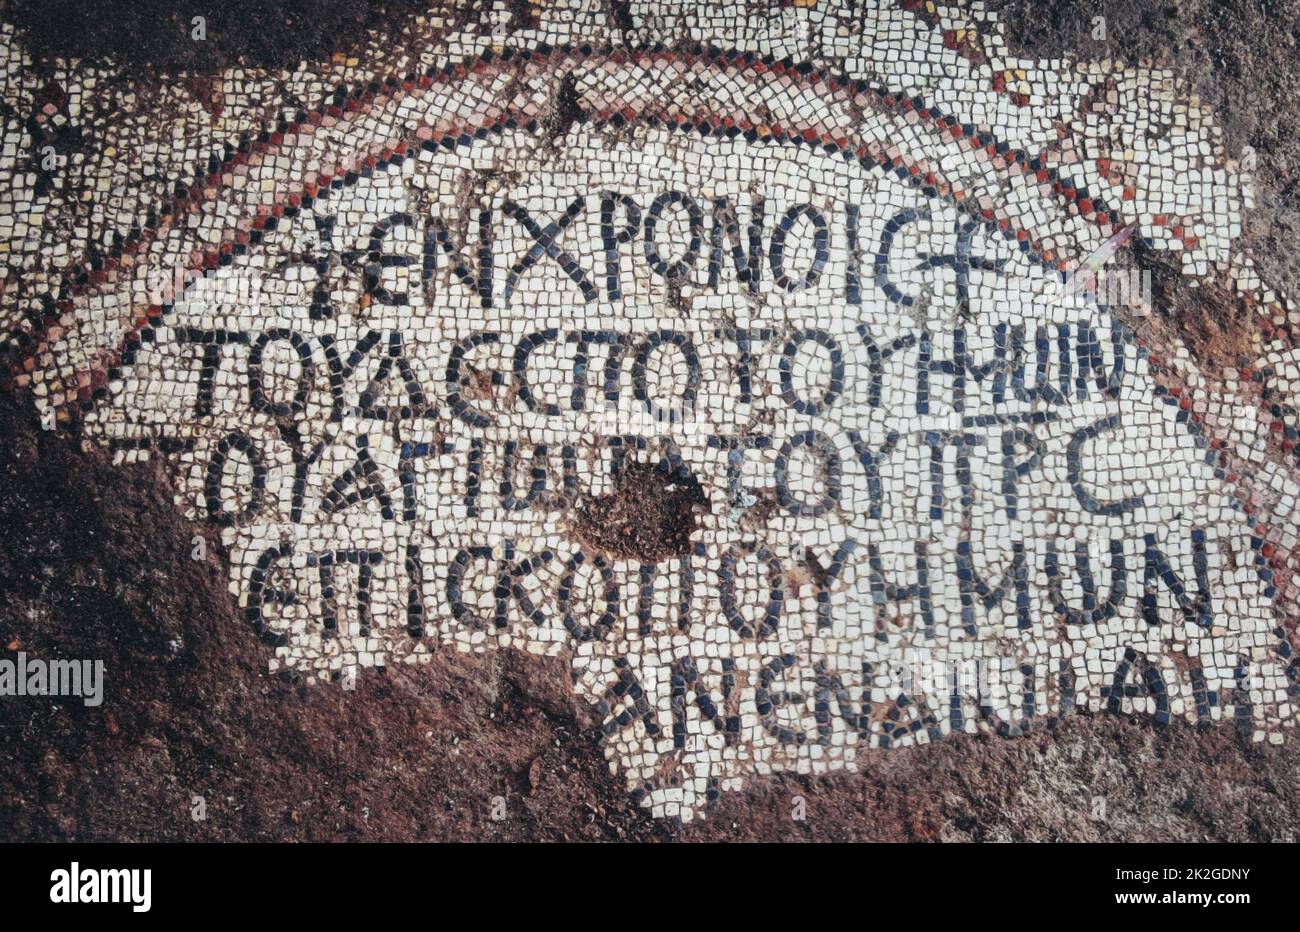 6973. Bethsaida byzantine church mosaic Greek inscription dating c. 5th. C. AD. Stock Photo